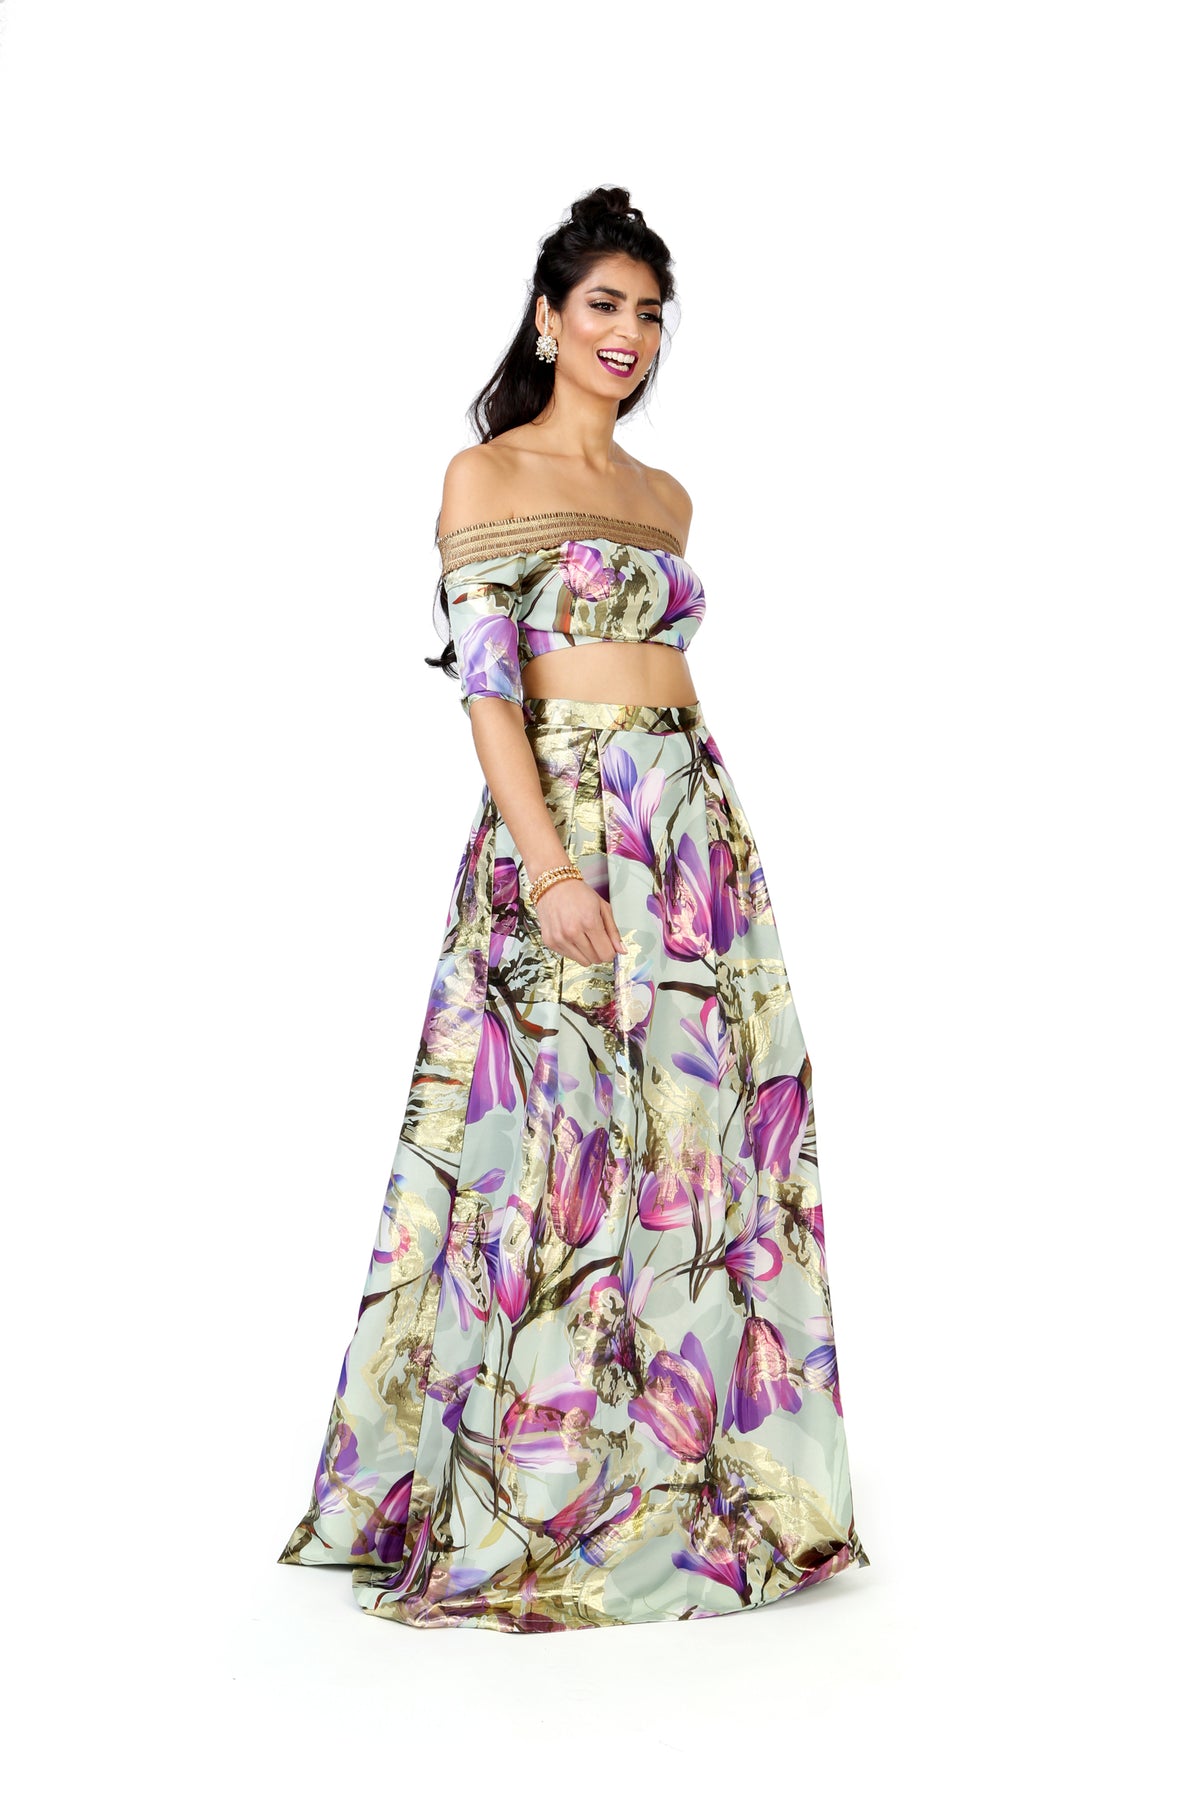 JAMANI Tulip Jacquard Lehenga Skirt - Front View - Harleen Kaur - South Asian Womenswear